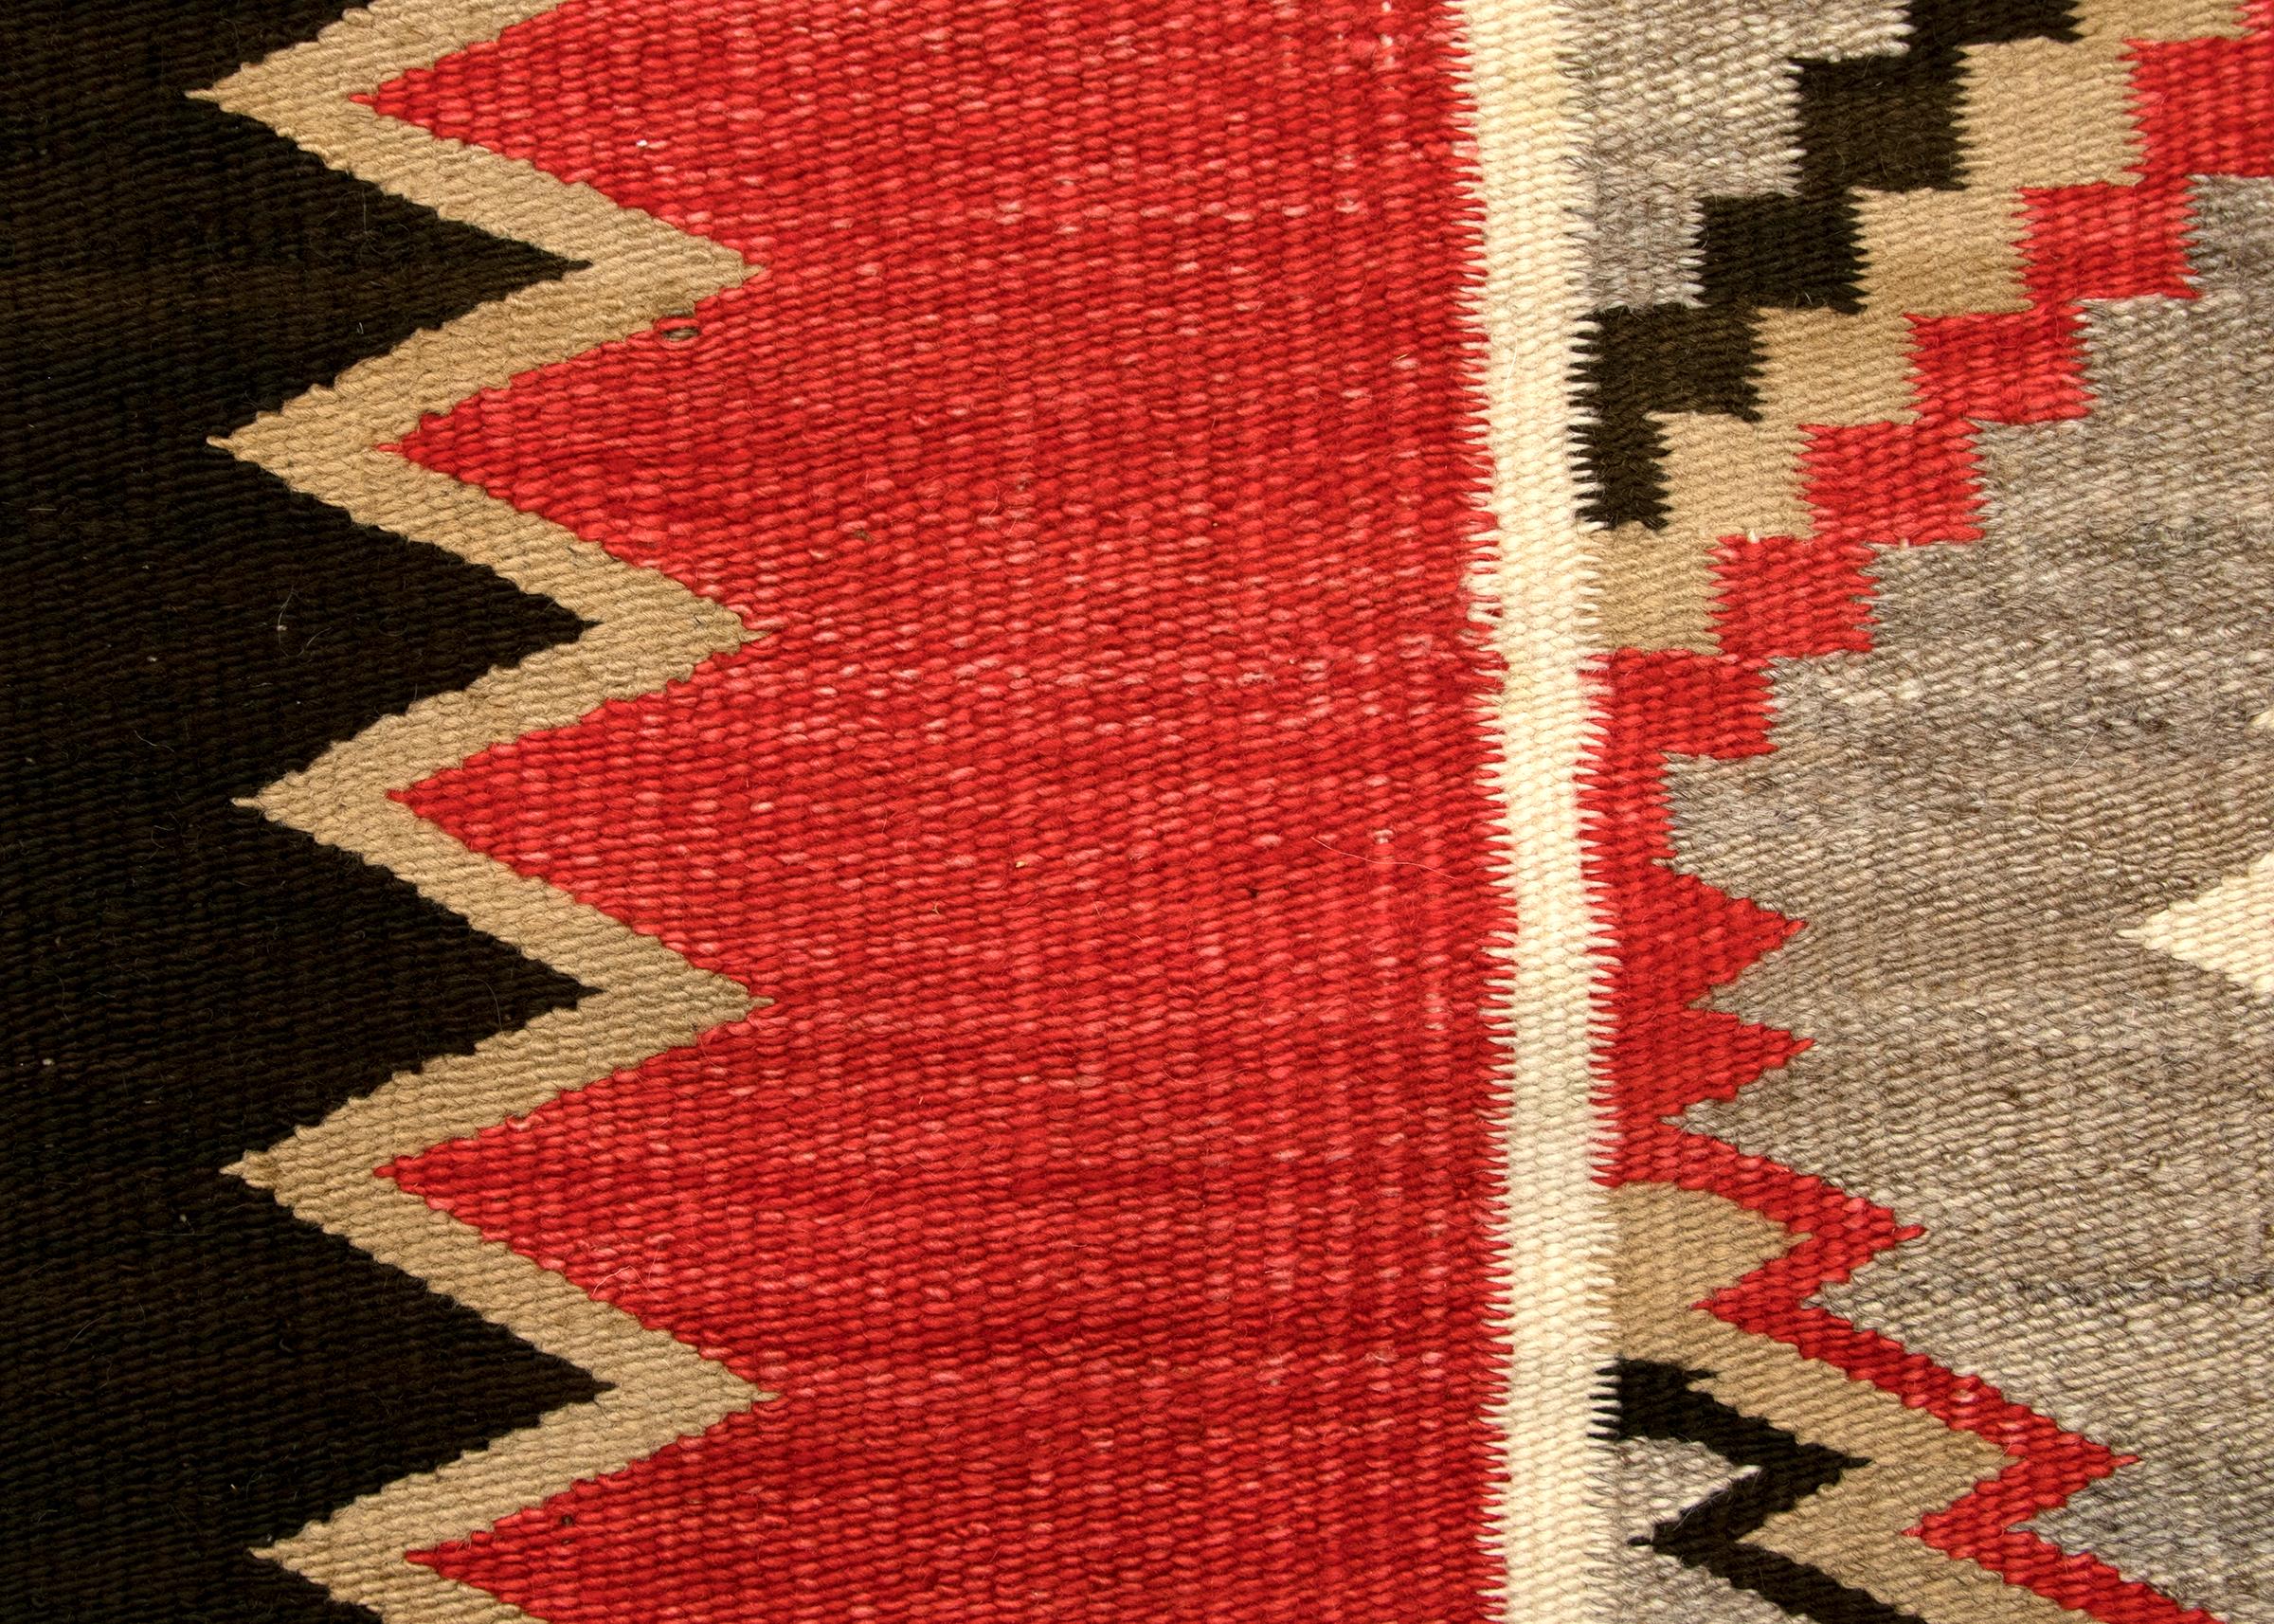 Native American Vintage Navajo Trading Post Rug, circa 1930, Gray, Brown, Red, White and Black